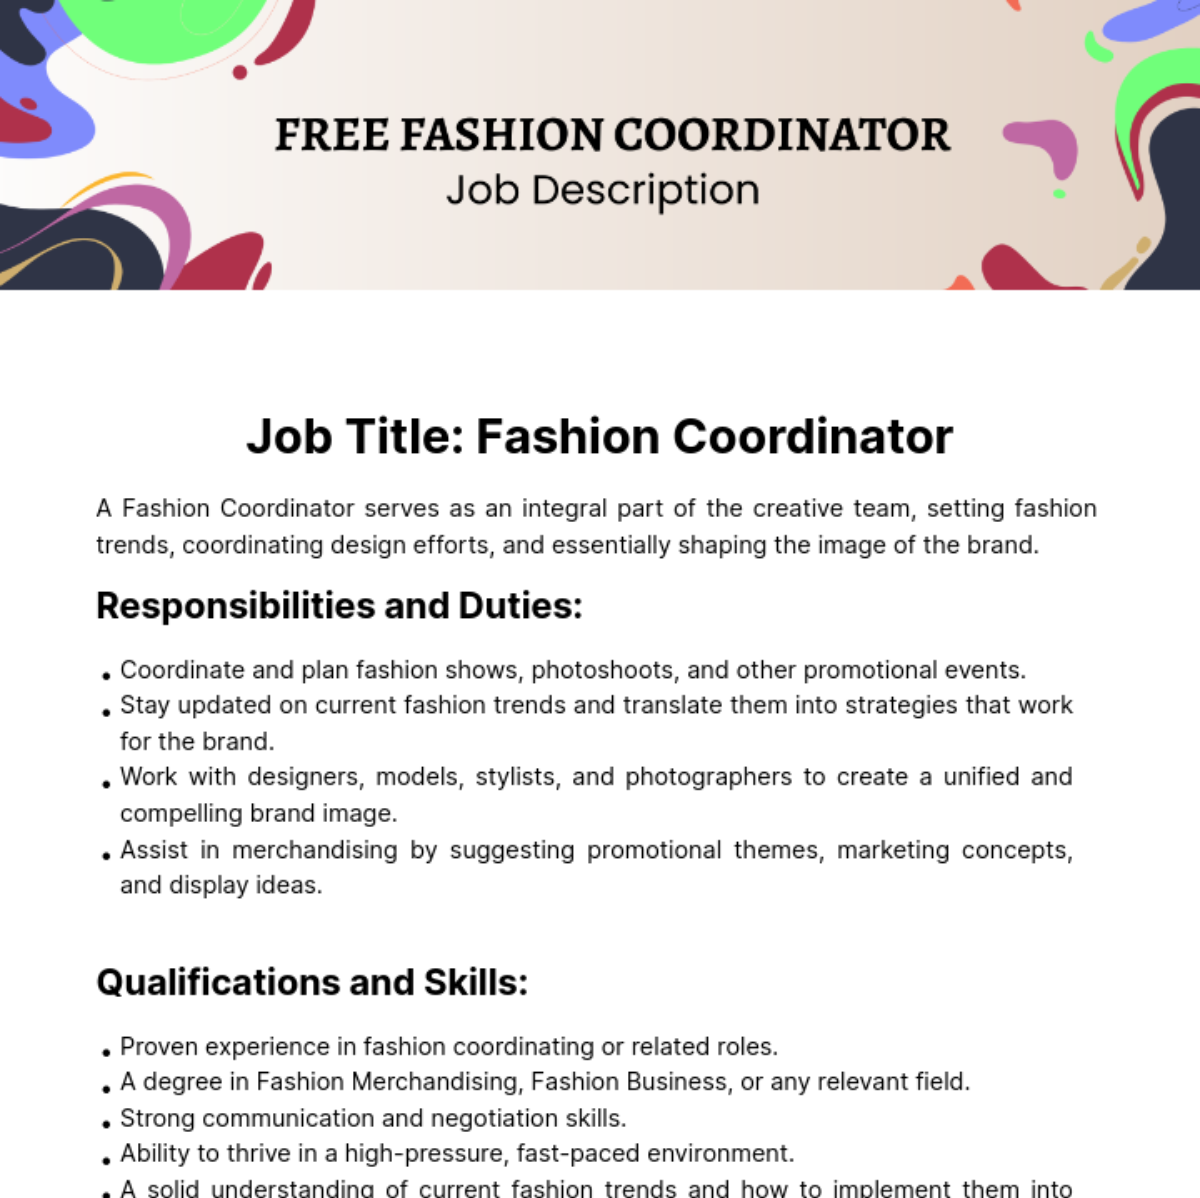 Free Fashion Coordinator Job Description Template